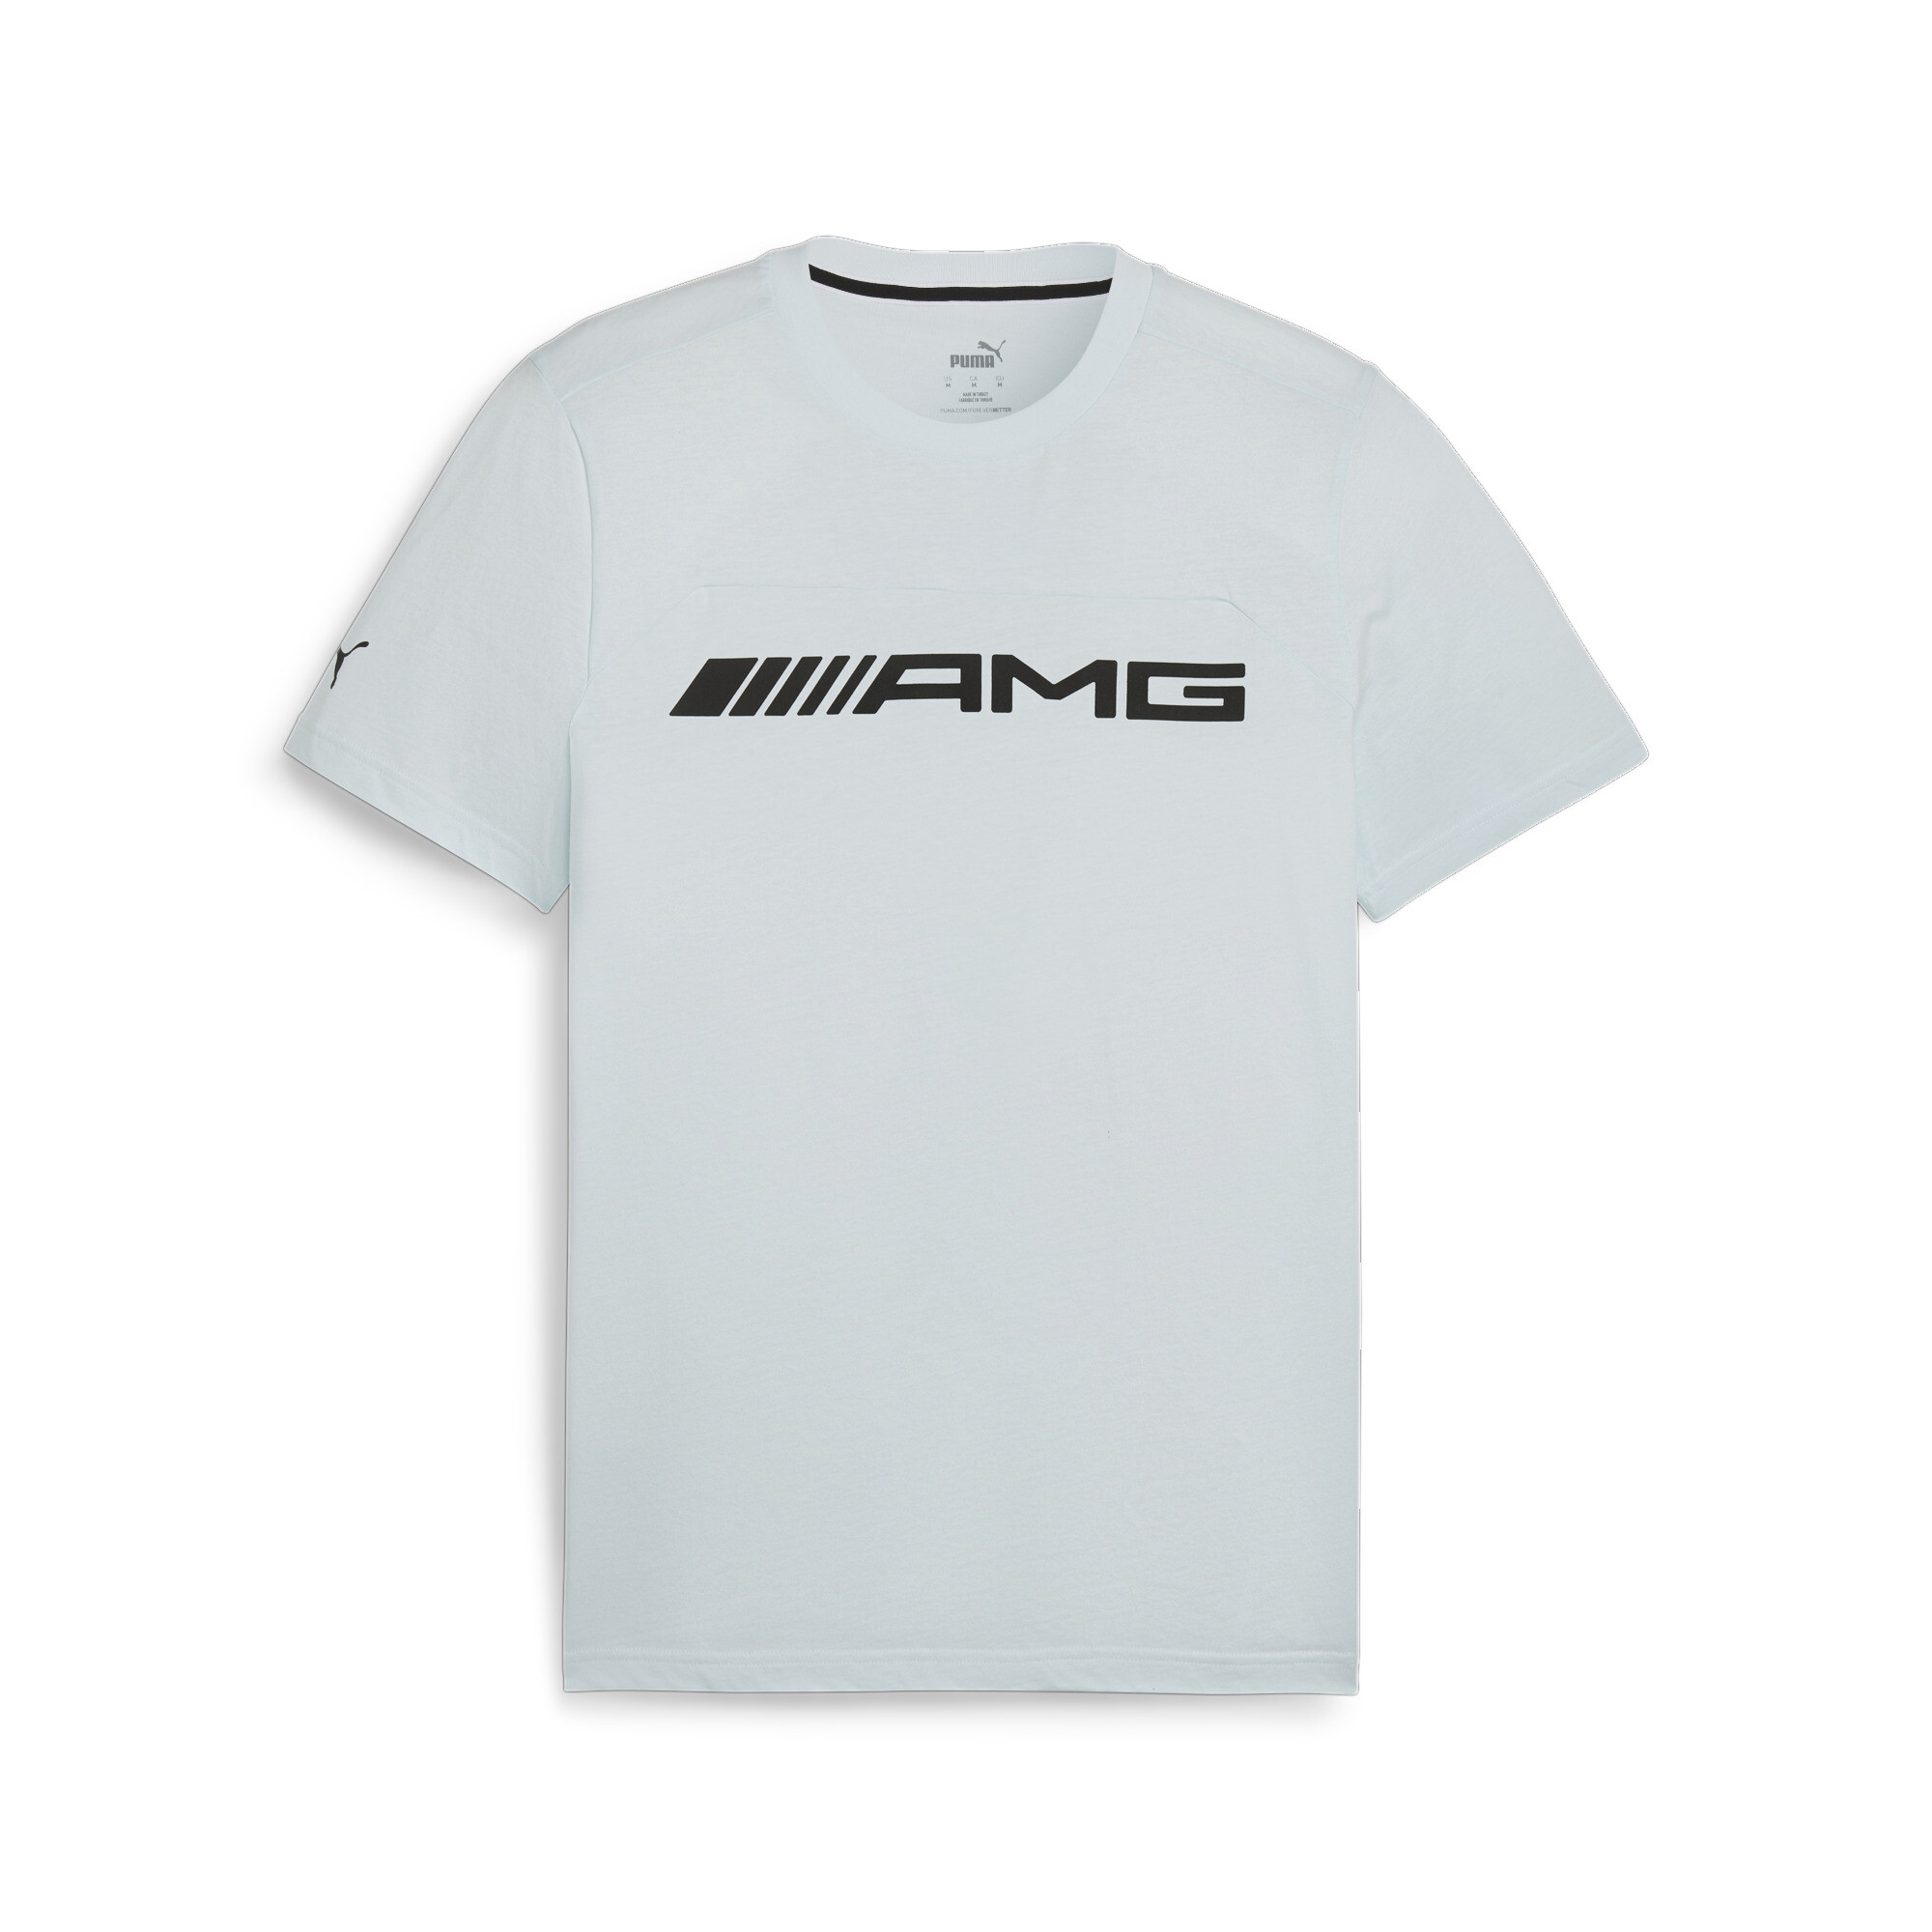 Men's Puma AMG Motorsports T-Shirt, Blue, Size L, Clothing